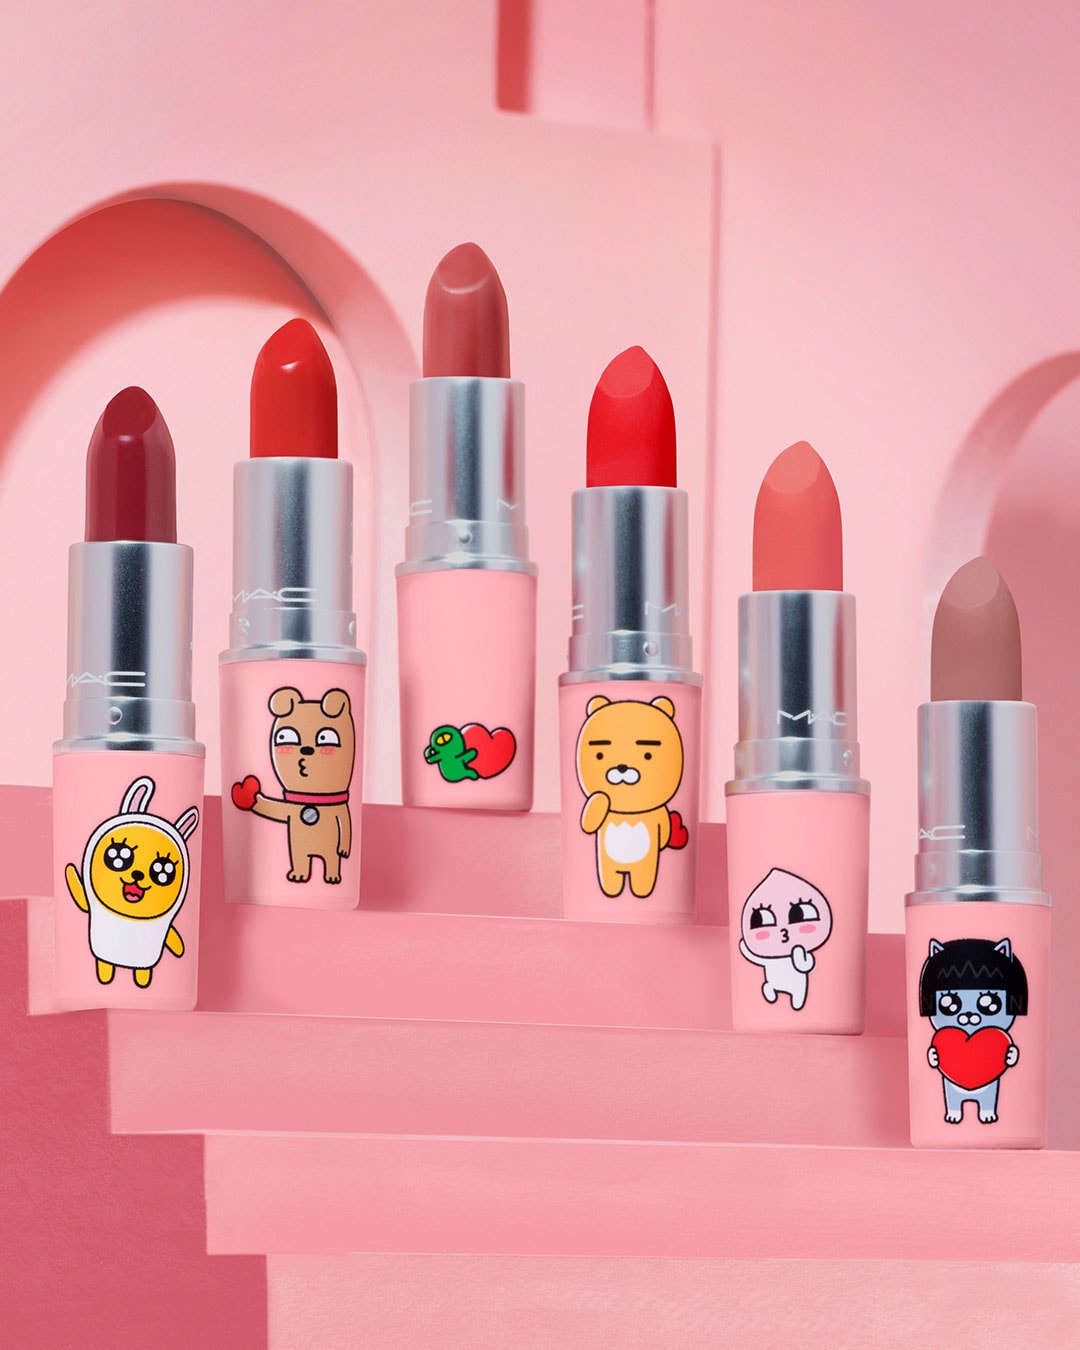 kakao friends mac cosmetics lipstick collaboration pink packaging